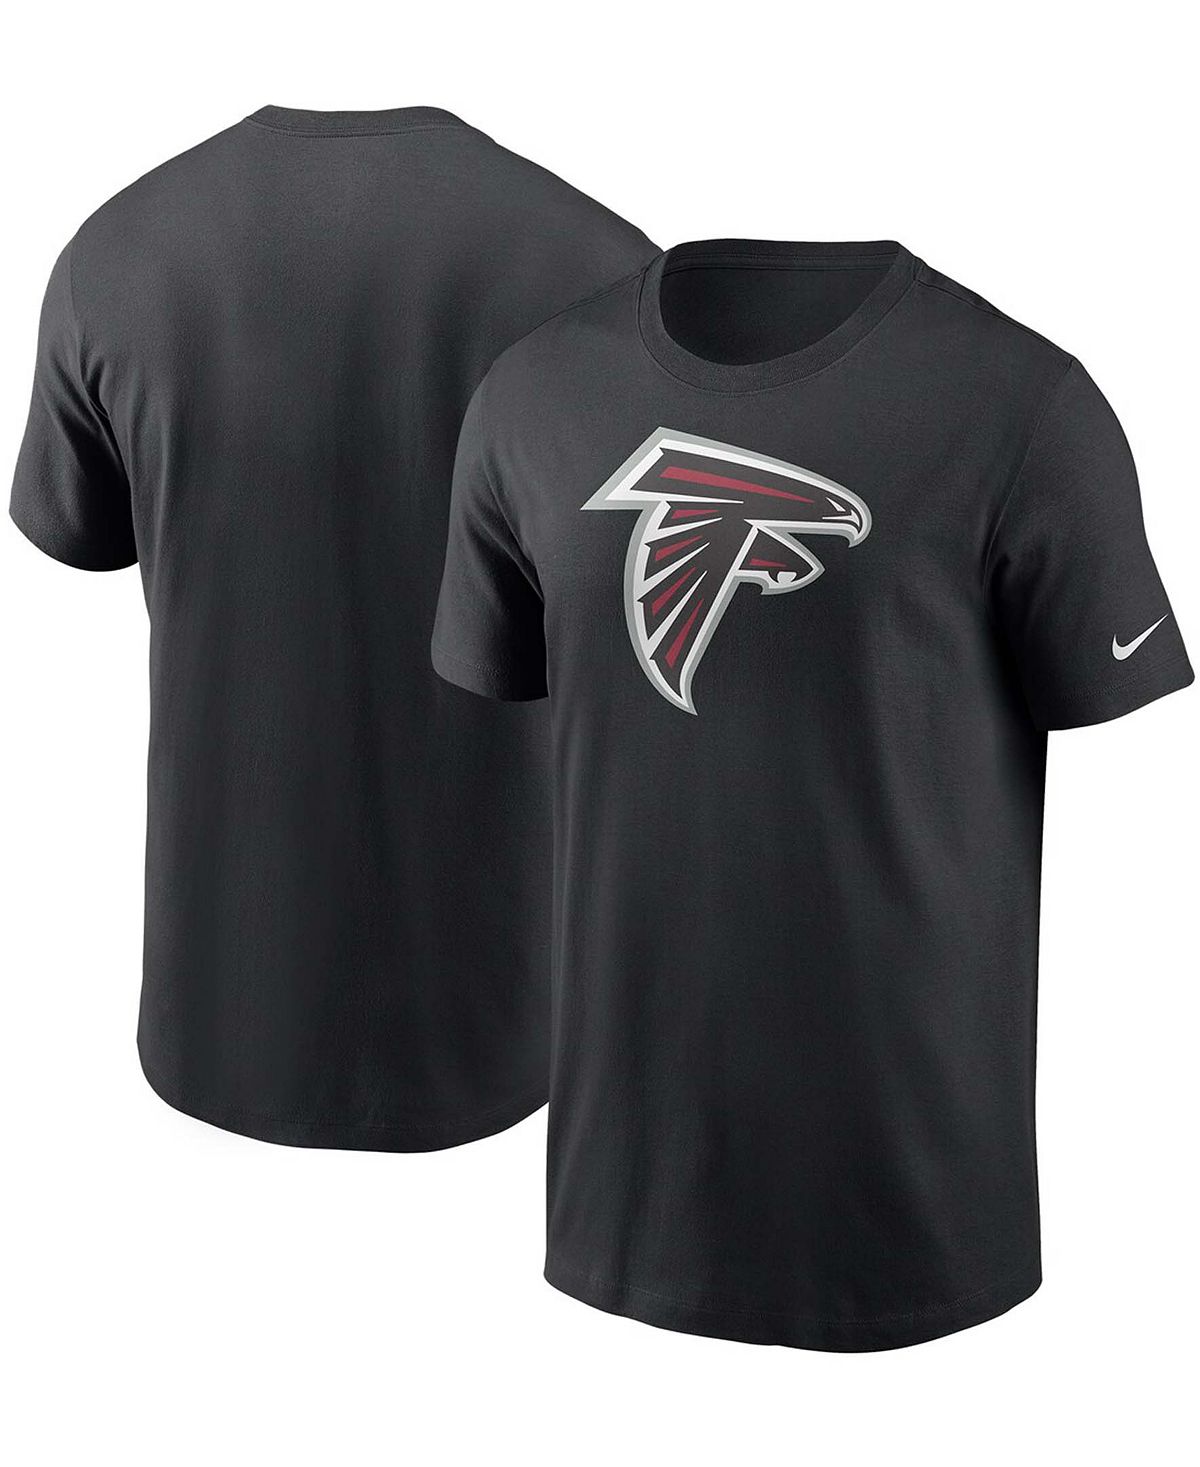 Мужская черная футболка с логотипом Atlanta Falcons Primary Nike